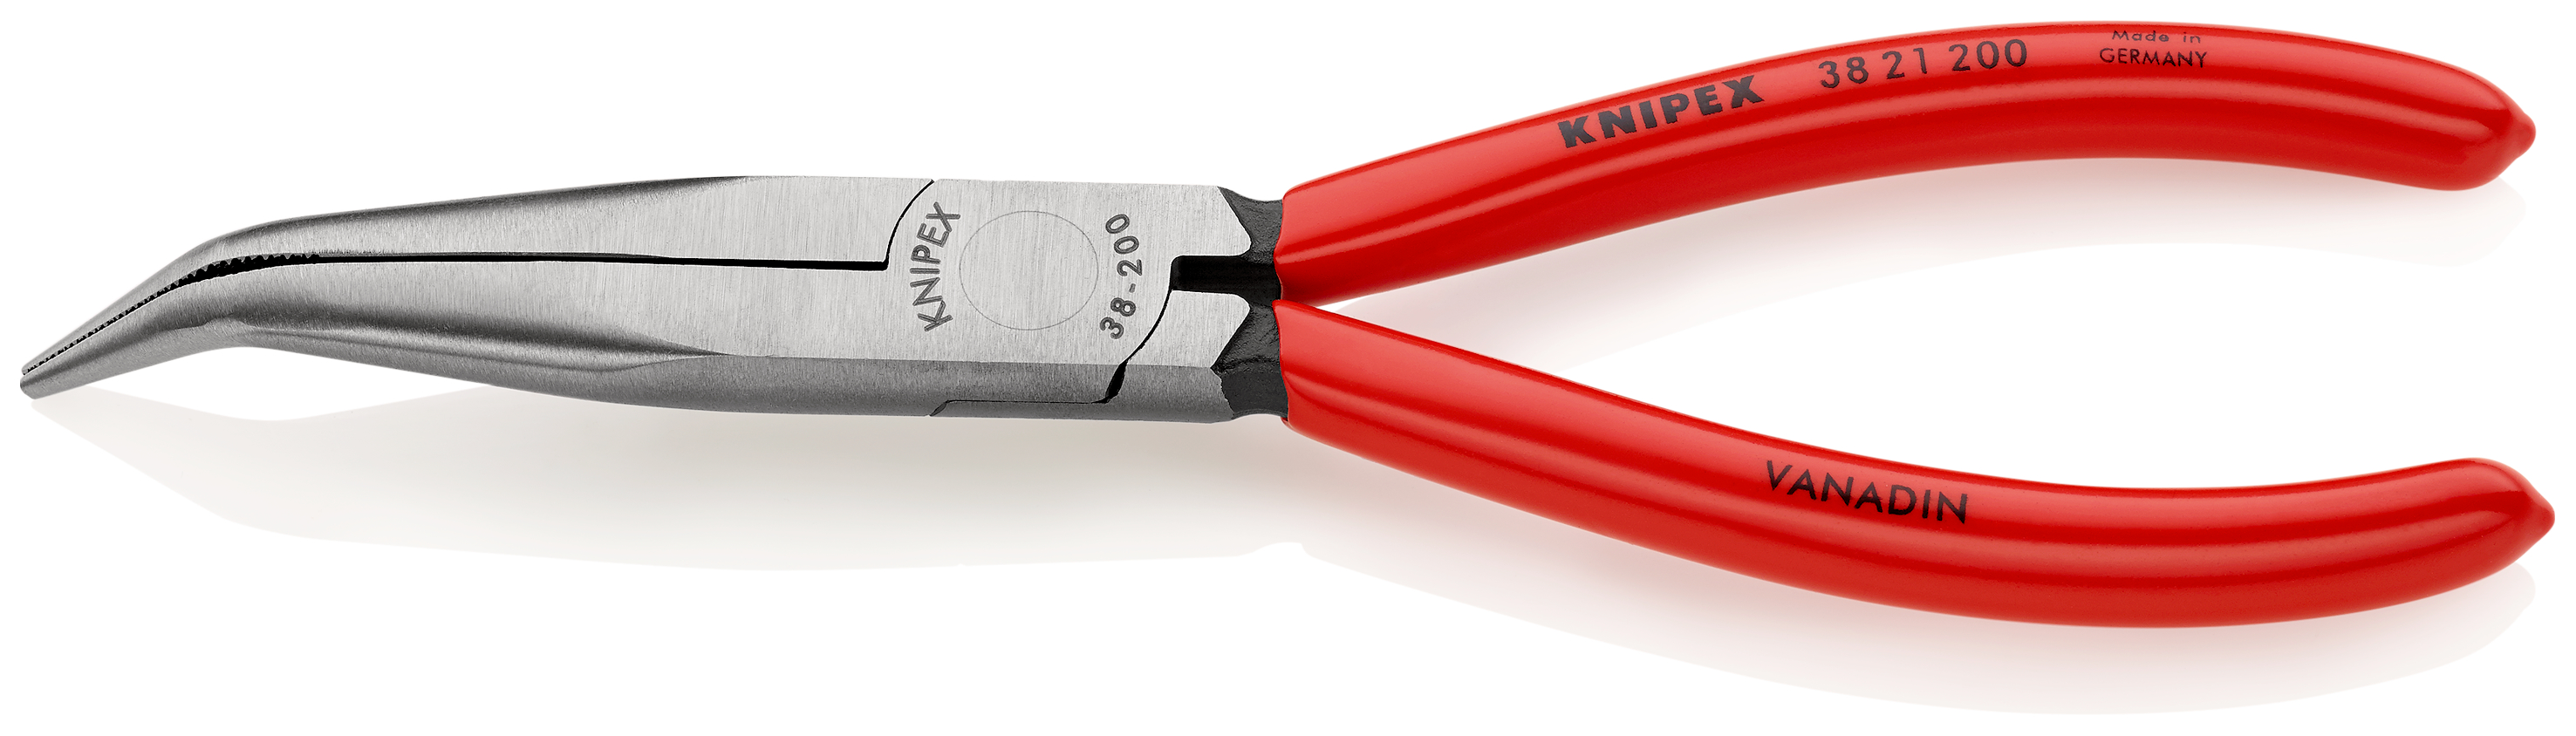 Knipex 3821200 Cleste spit cu varfuri indoite la 40°, lungime 200 mm